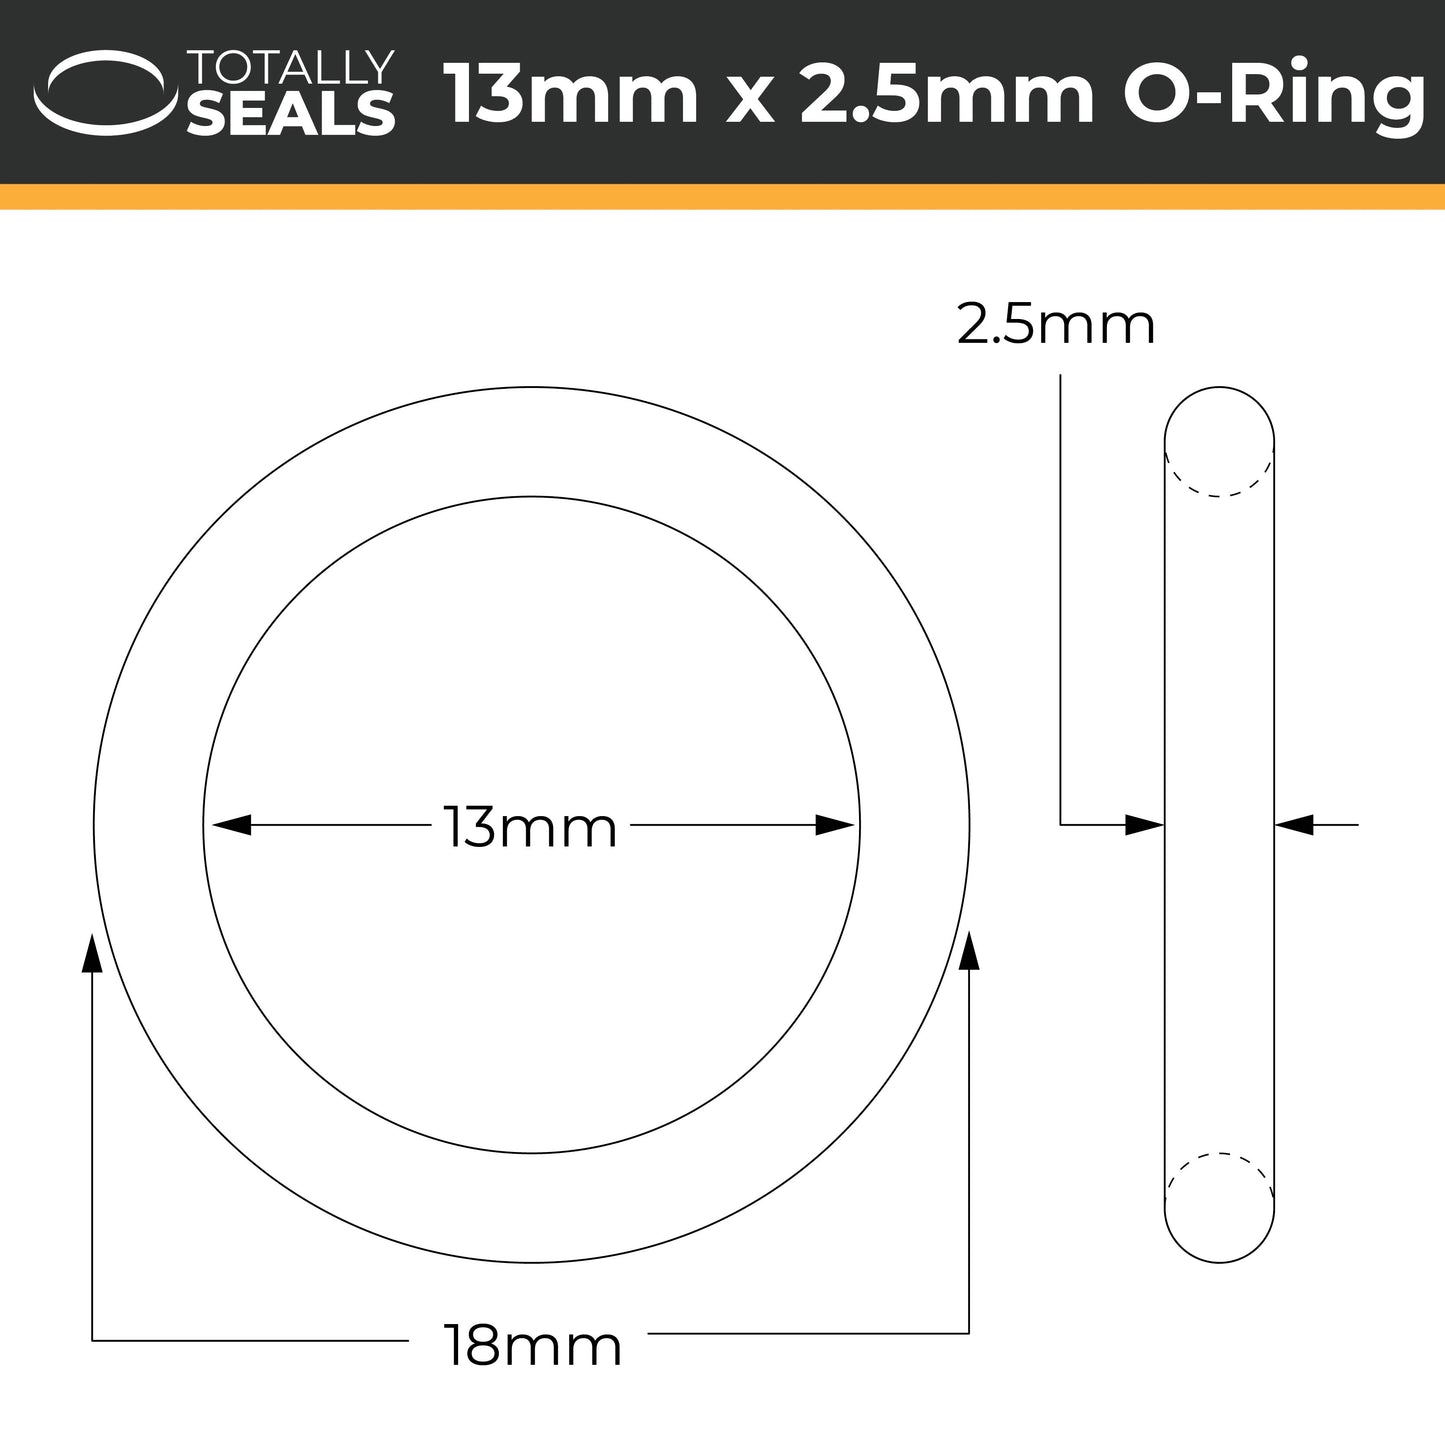 13mm x 2.5mm (18mm OD) FKM (Viton™) O-Rings - Totally Seals®